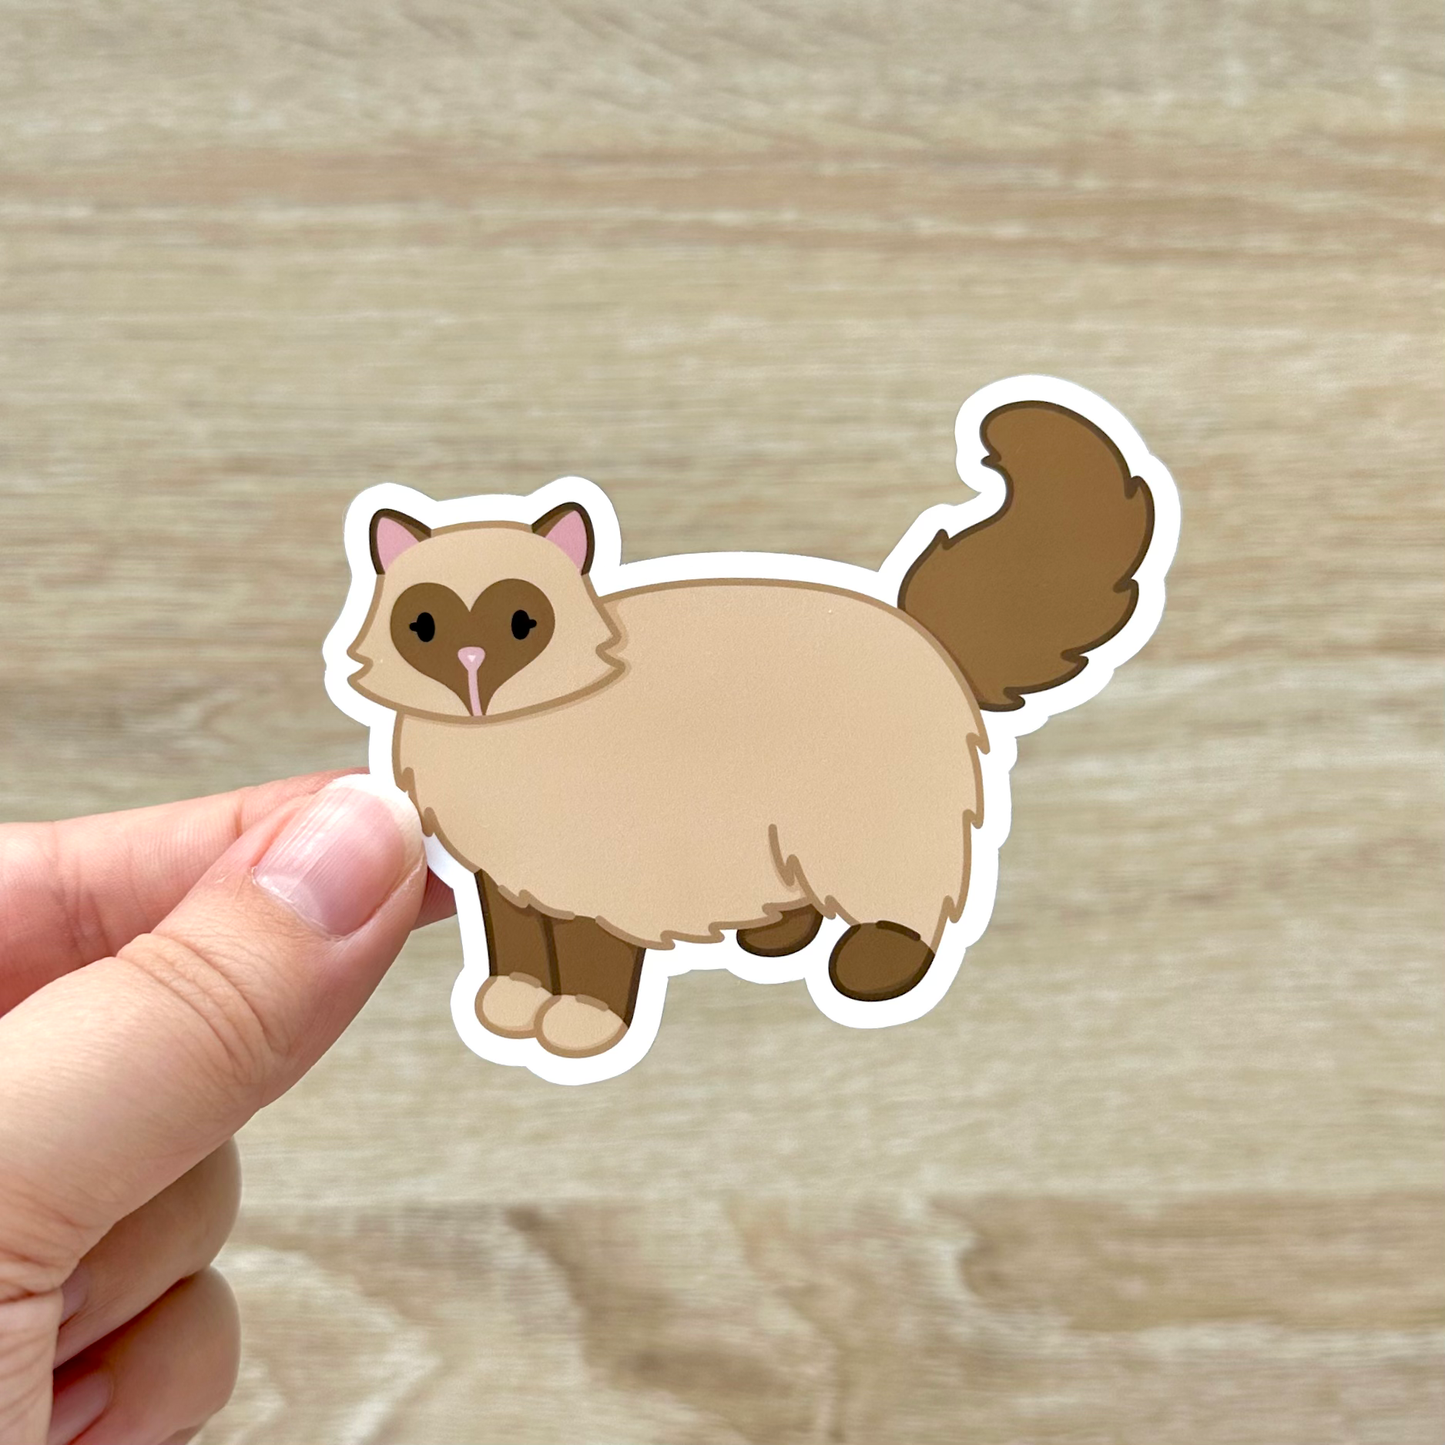 Cats Sticker Pack